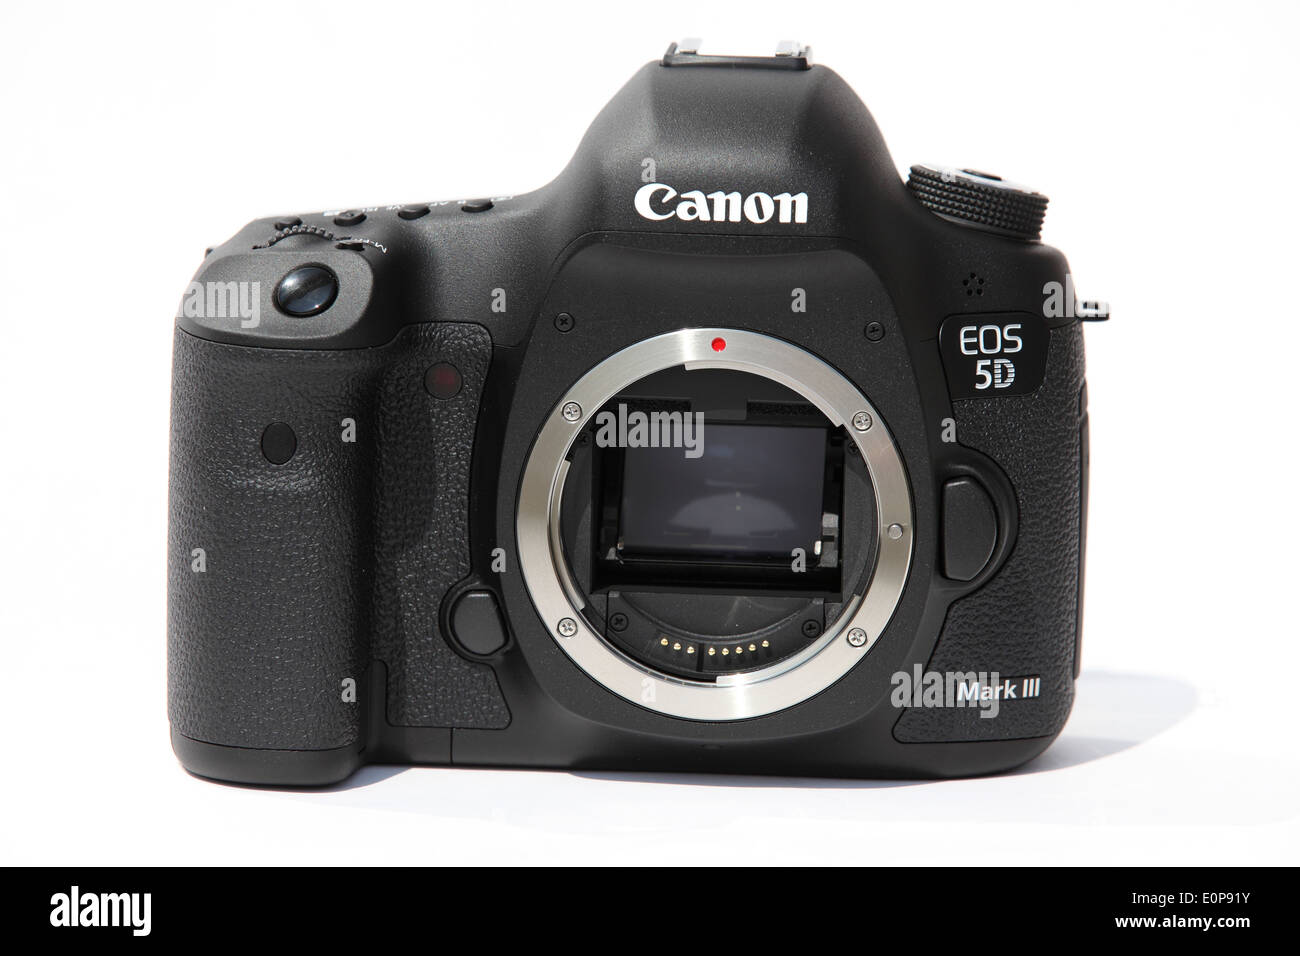 Eine Canon 5D Mark III digitale (SLR) Spiegelreflexkamera. Stockfoto